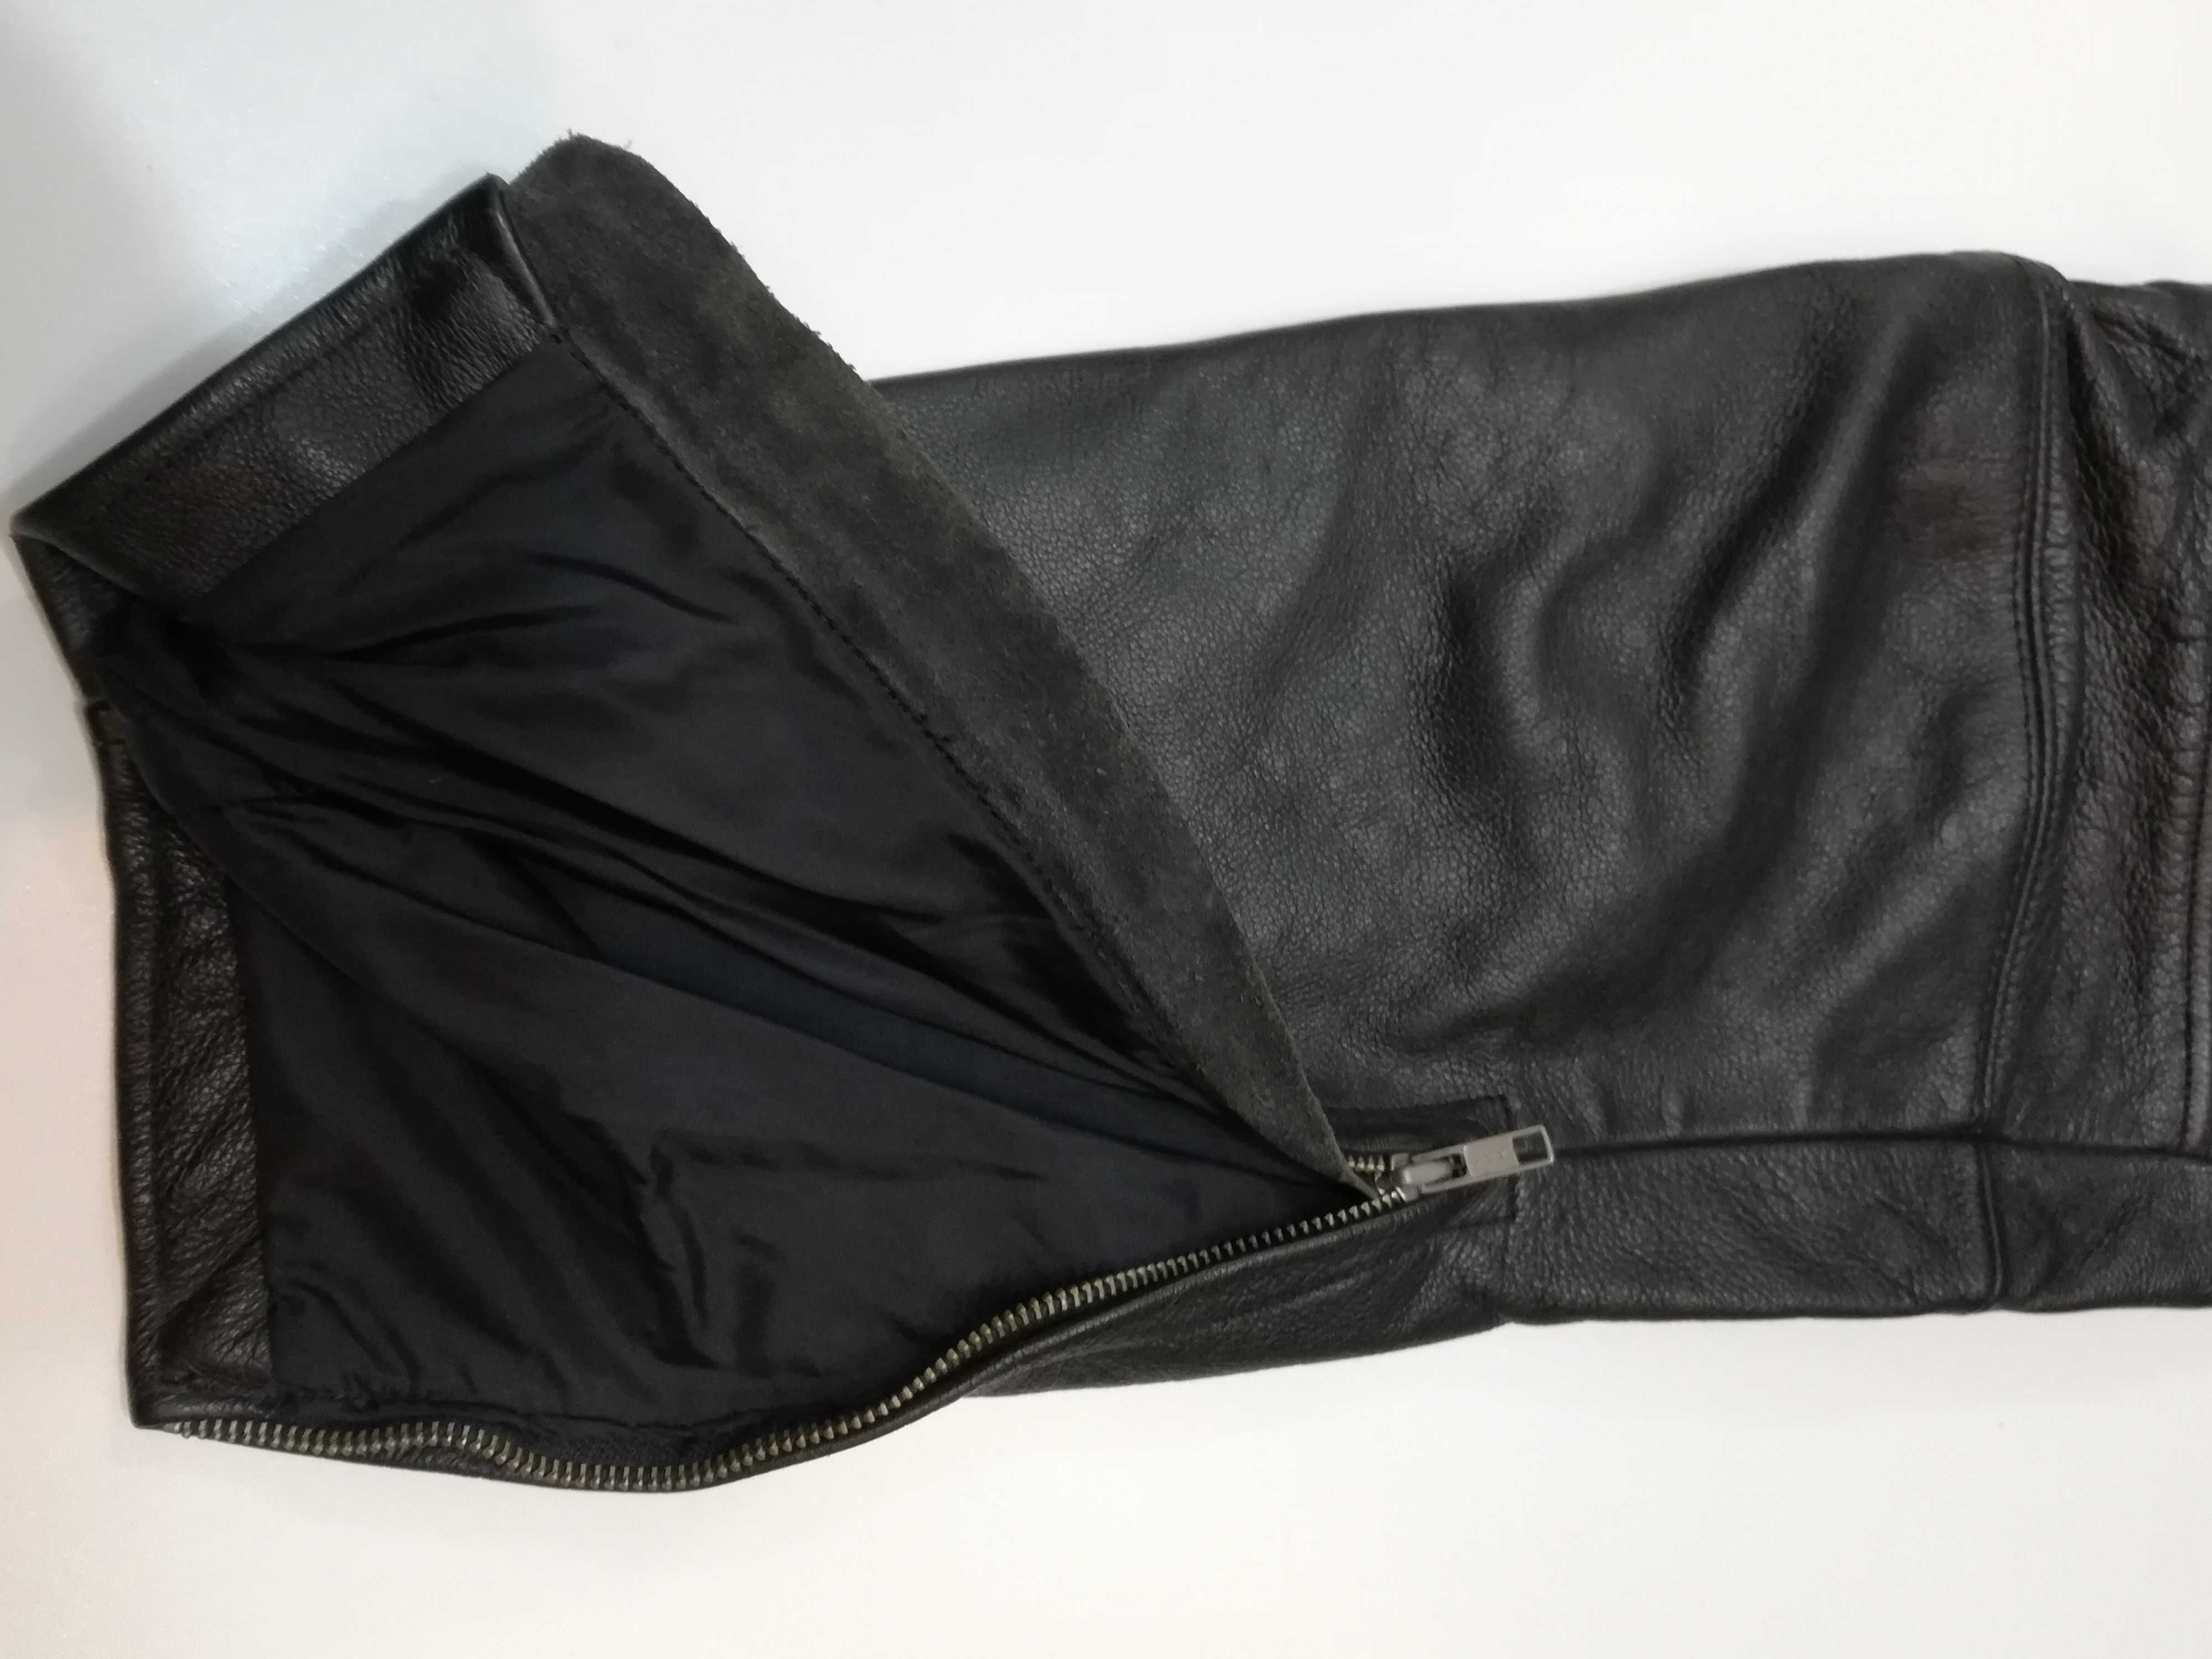 Spodnie czarne skórzane damskie, rozmiar 38